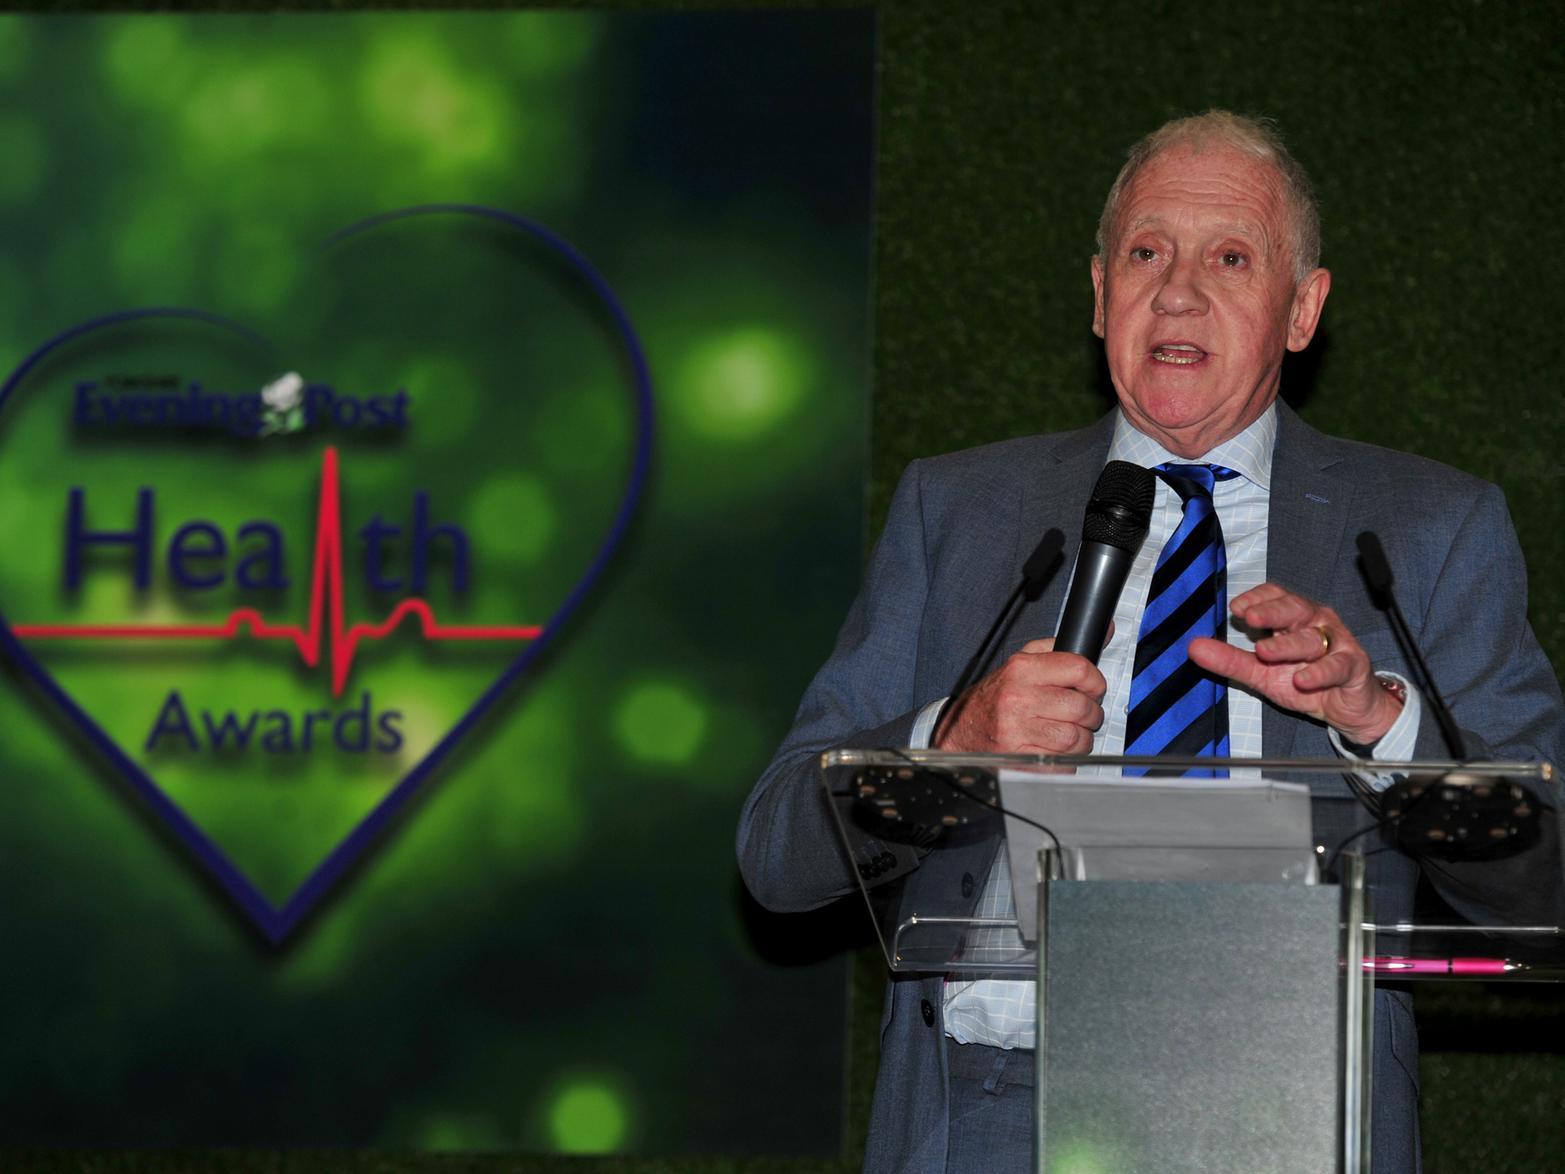 Harry Gration, presenter of BBC Look North, was host of the YEP health Awards 2019